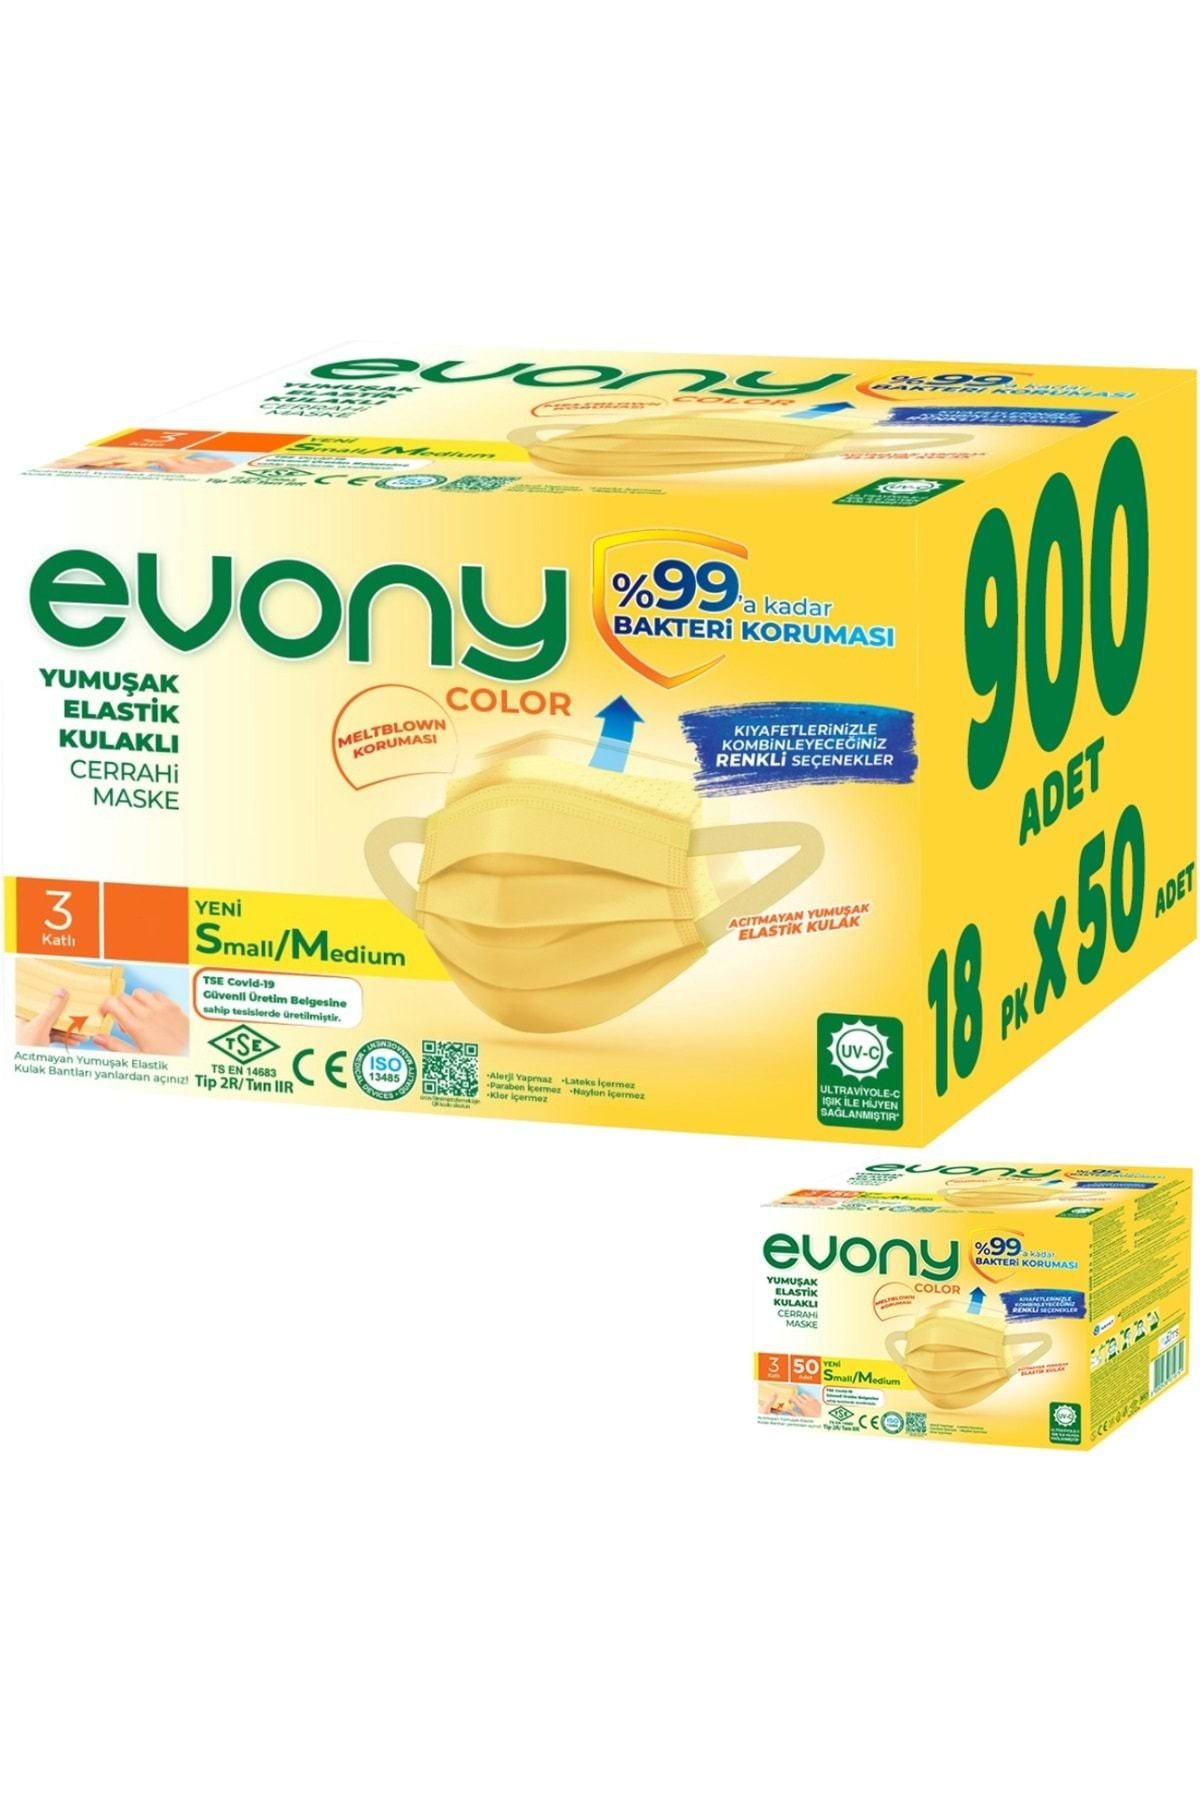 Evony 3 Katlı Filtreli Burun Telli Cerrahi Maske 900 Lü Set Small/medium Sarı 160*90mm (18pk*50)